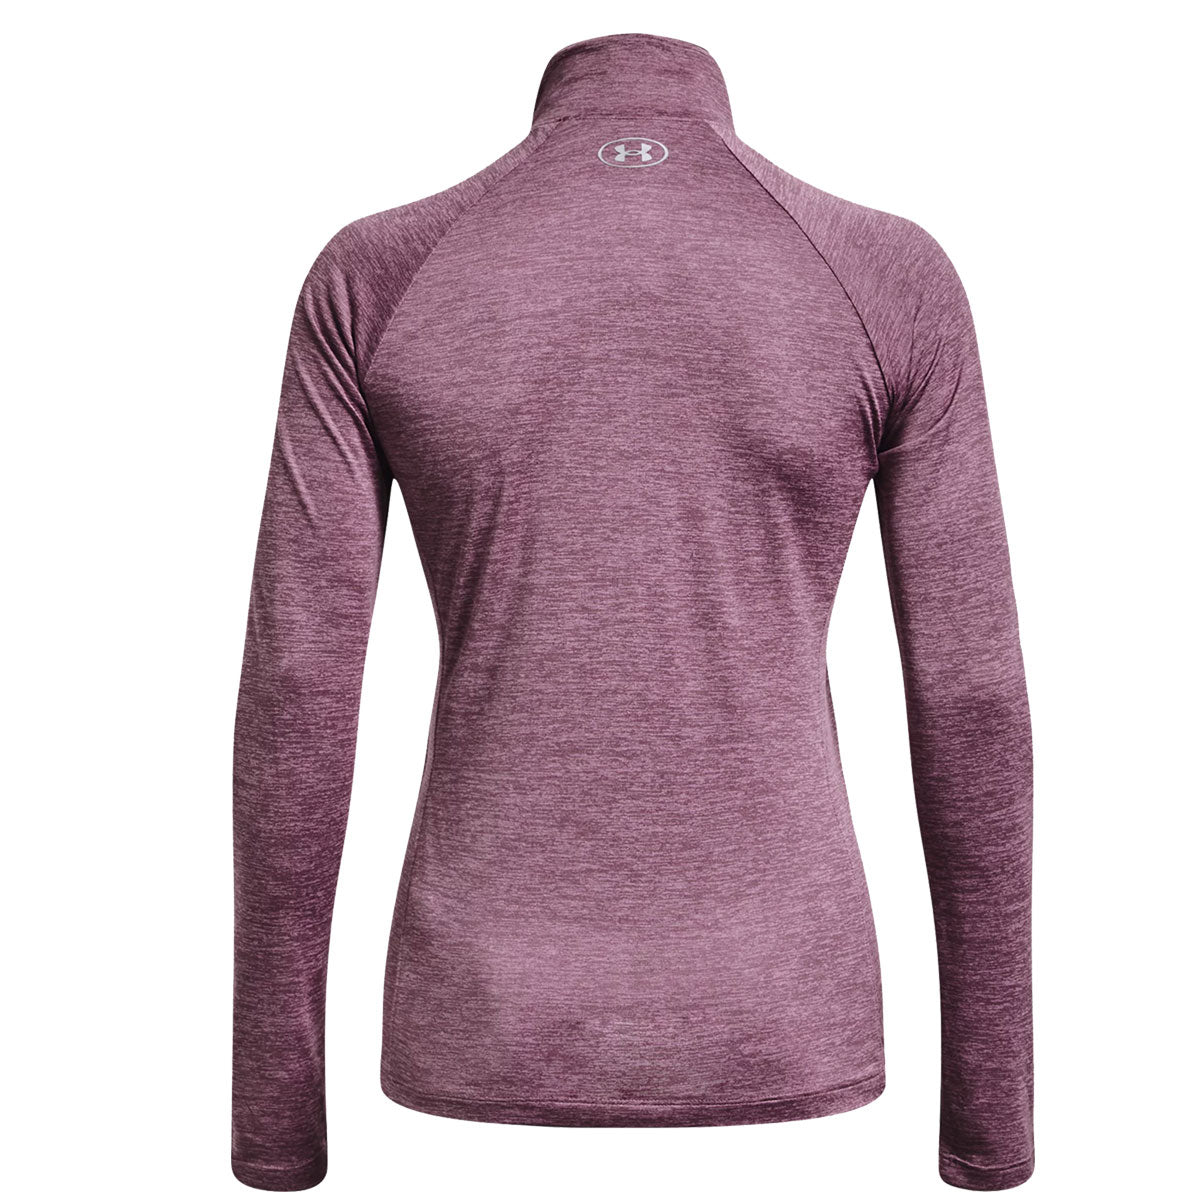 Under Armour TECH TWIST - Sports T-shirt - misty purple/white/silver/purple  